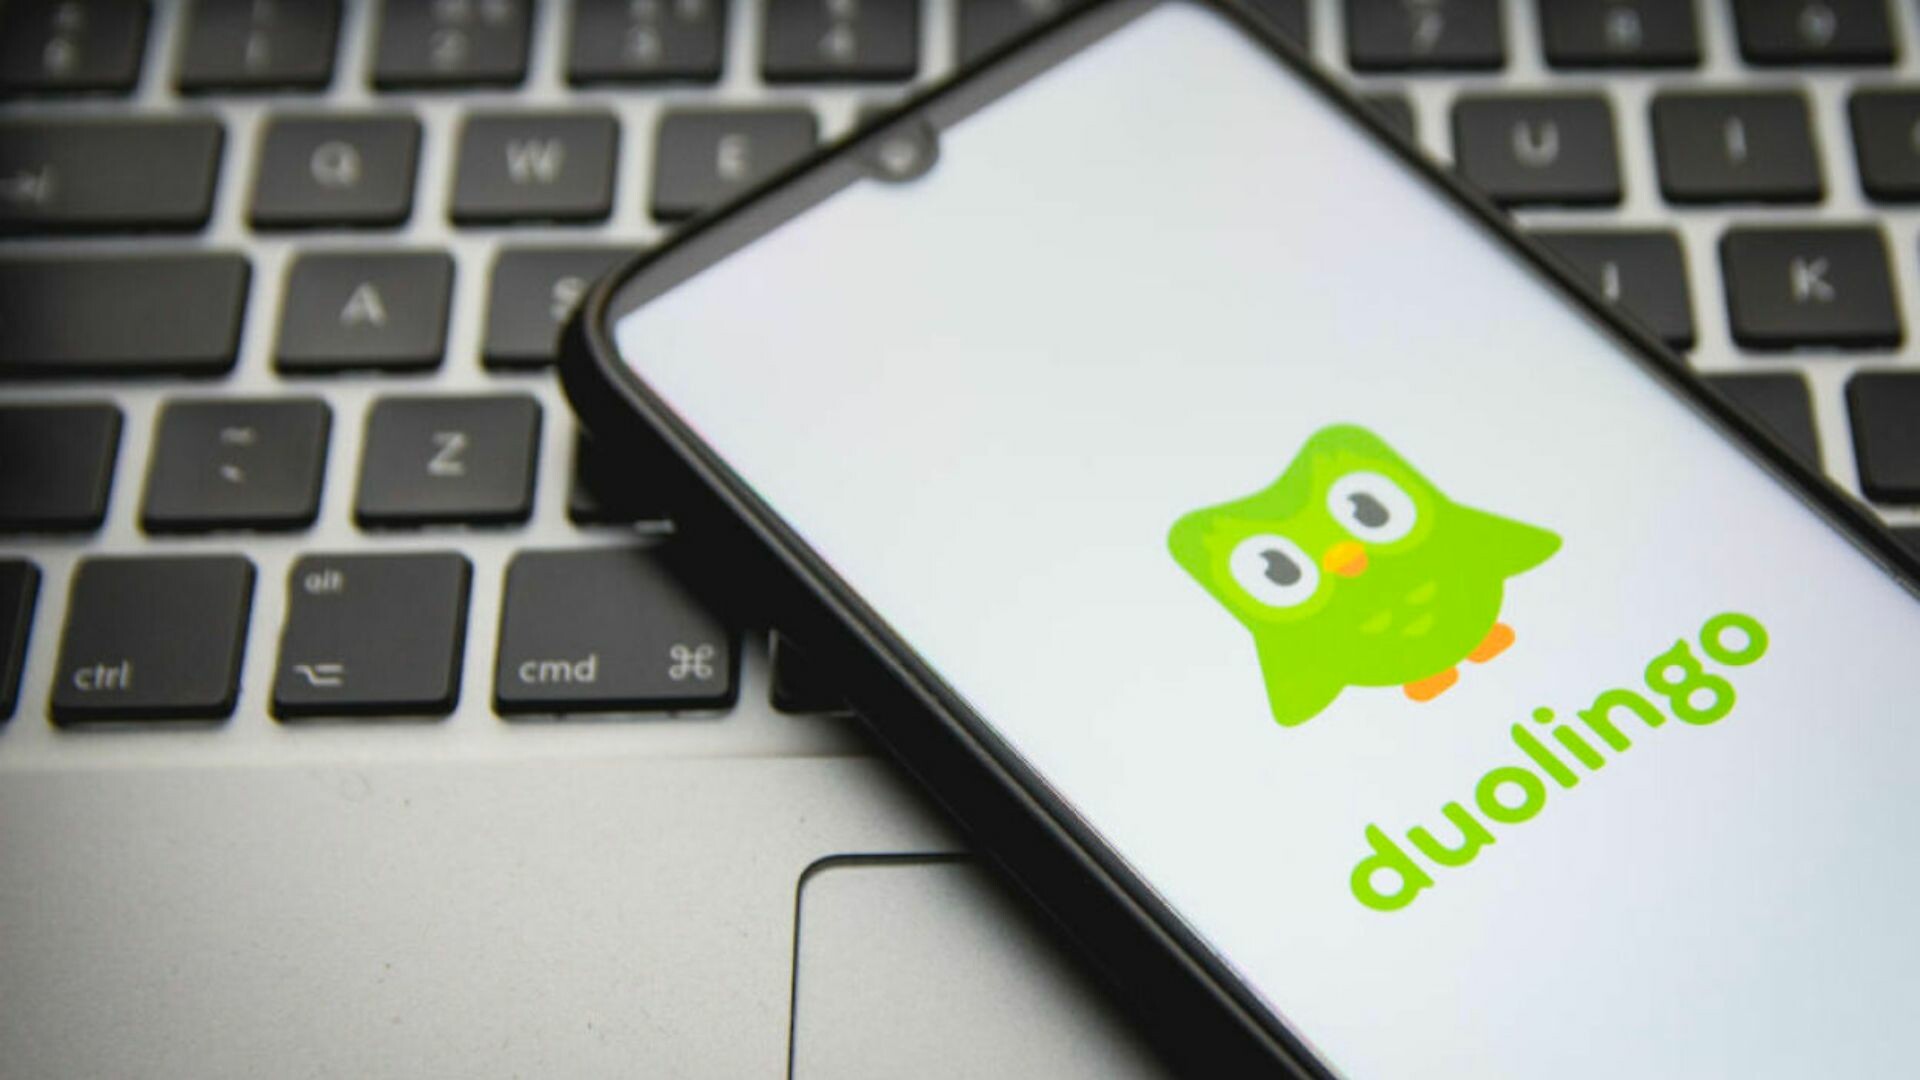 Duolingo open on a phone.